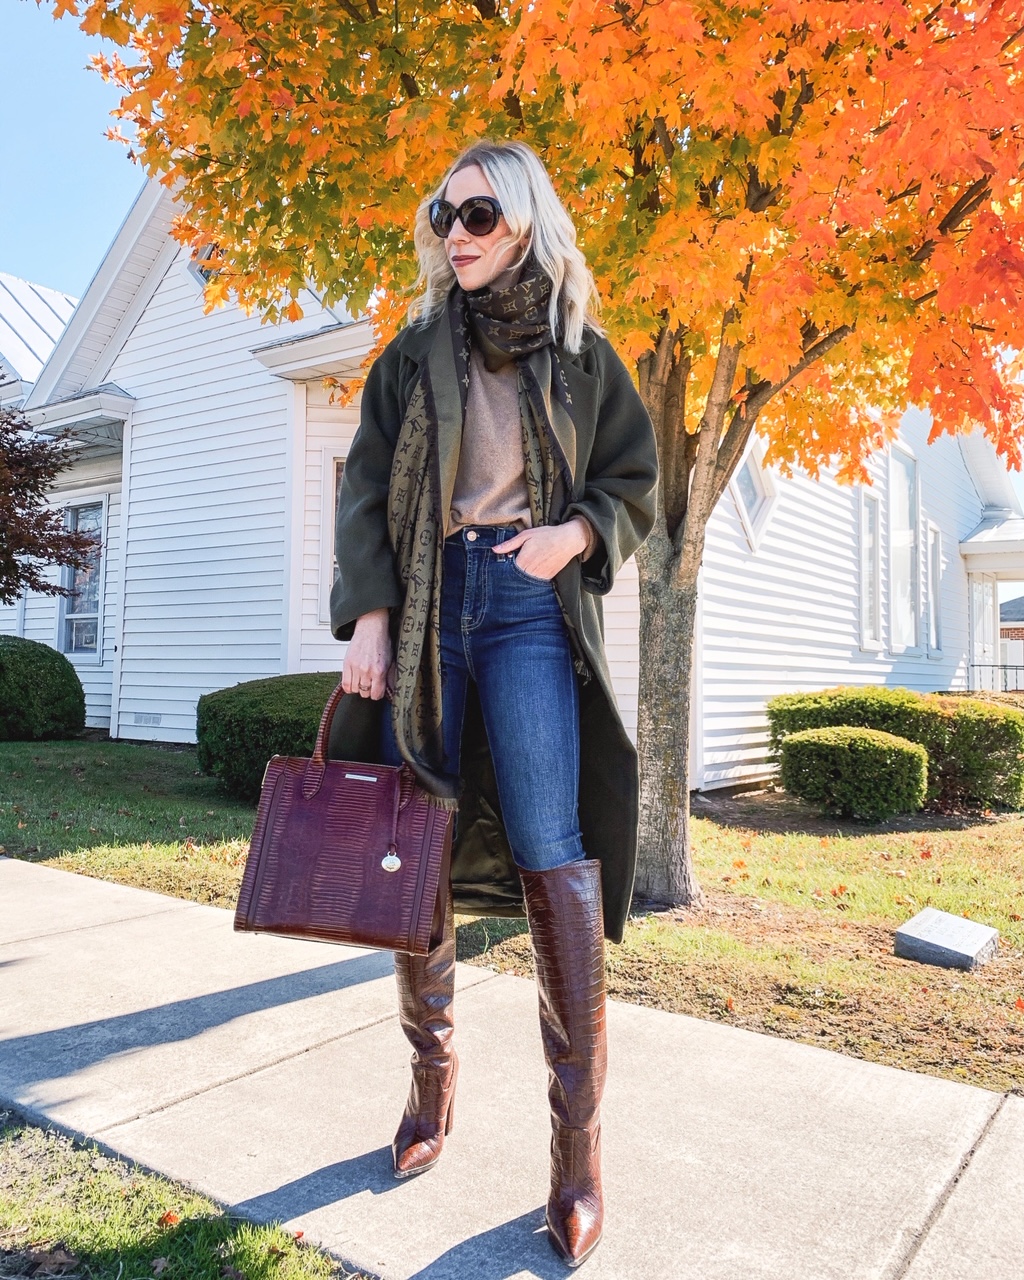 Meagan Brandon fashion blogger of Meagan's Moda shows how to style